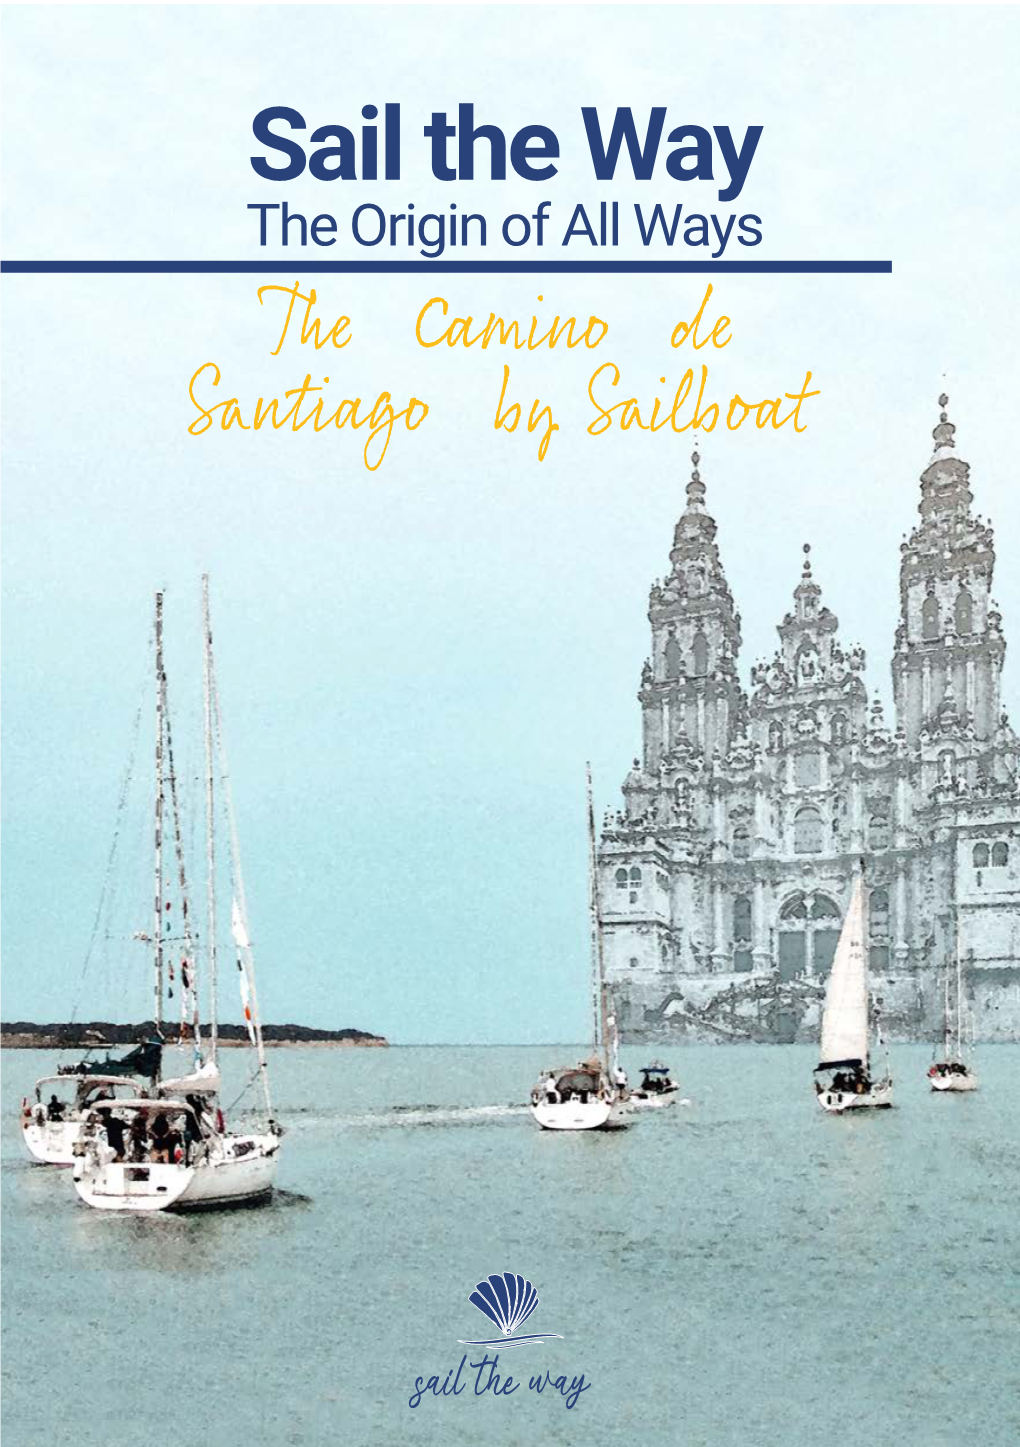 Sail the Way the Origin of All Ways the Camino De Santiago by Sailboat